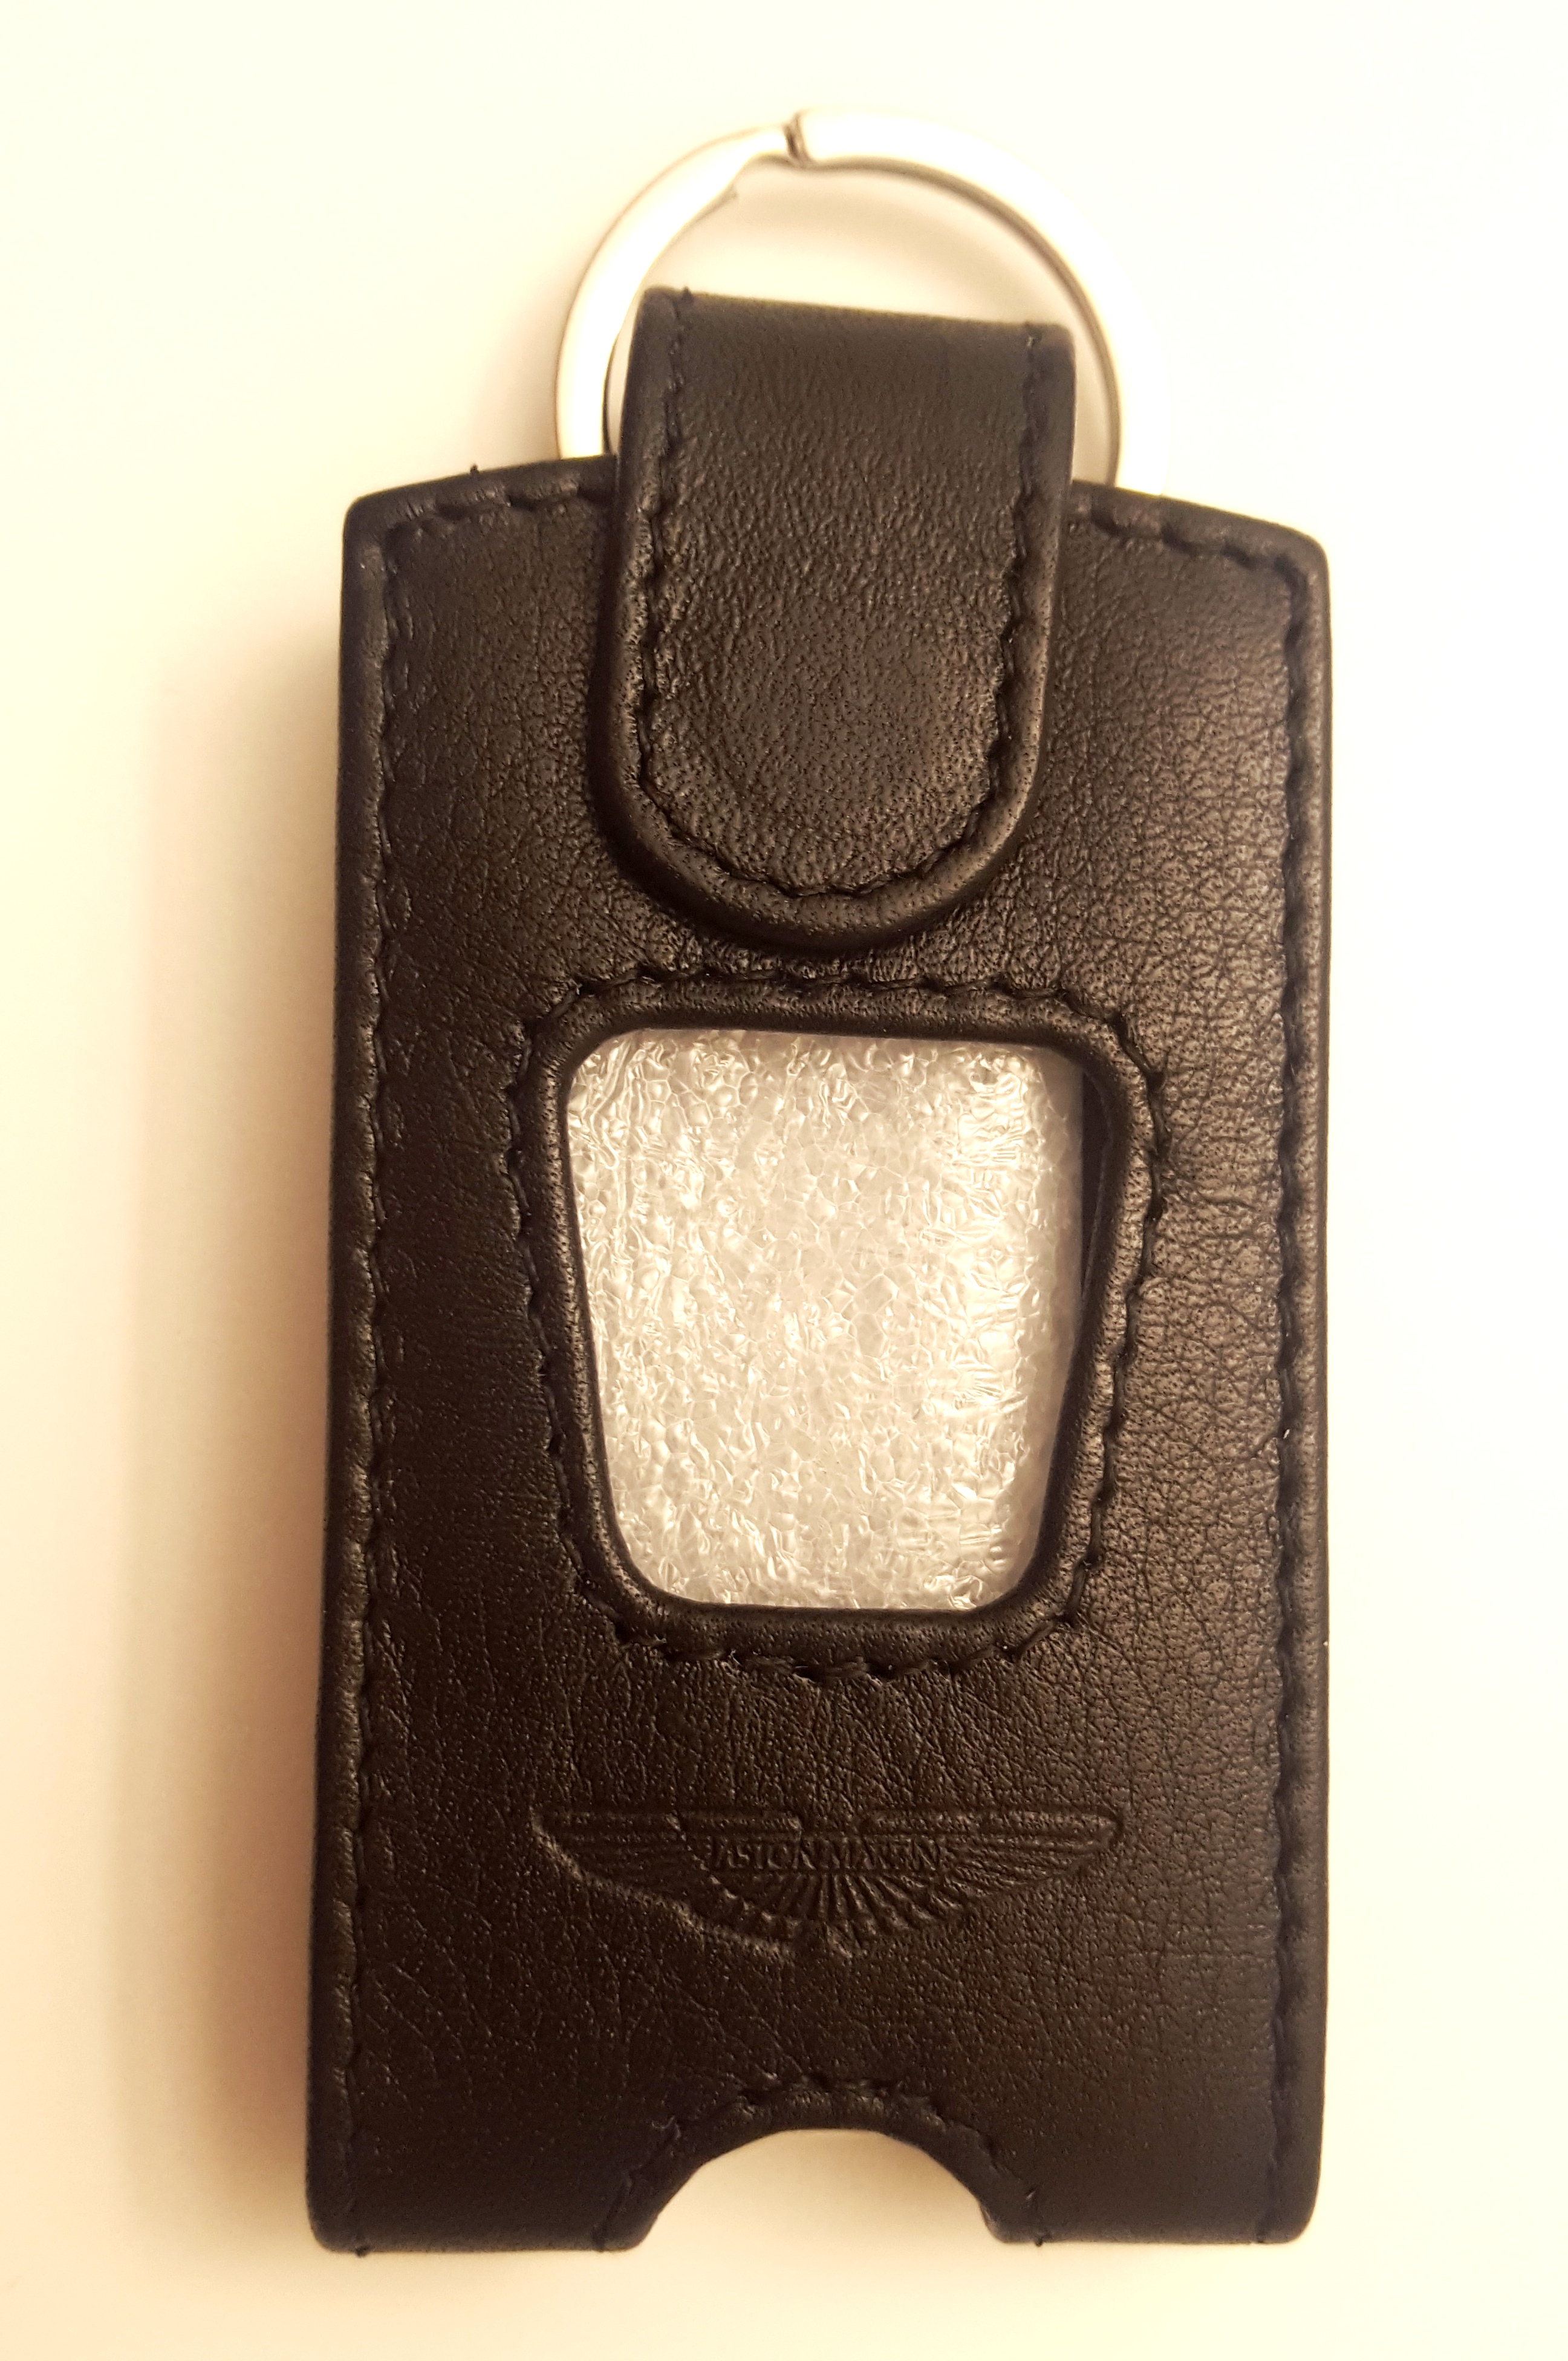 Aston Martin Schlüsseletui Glasschlüssel Bild 1.jpg